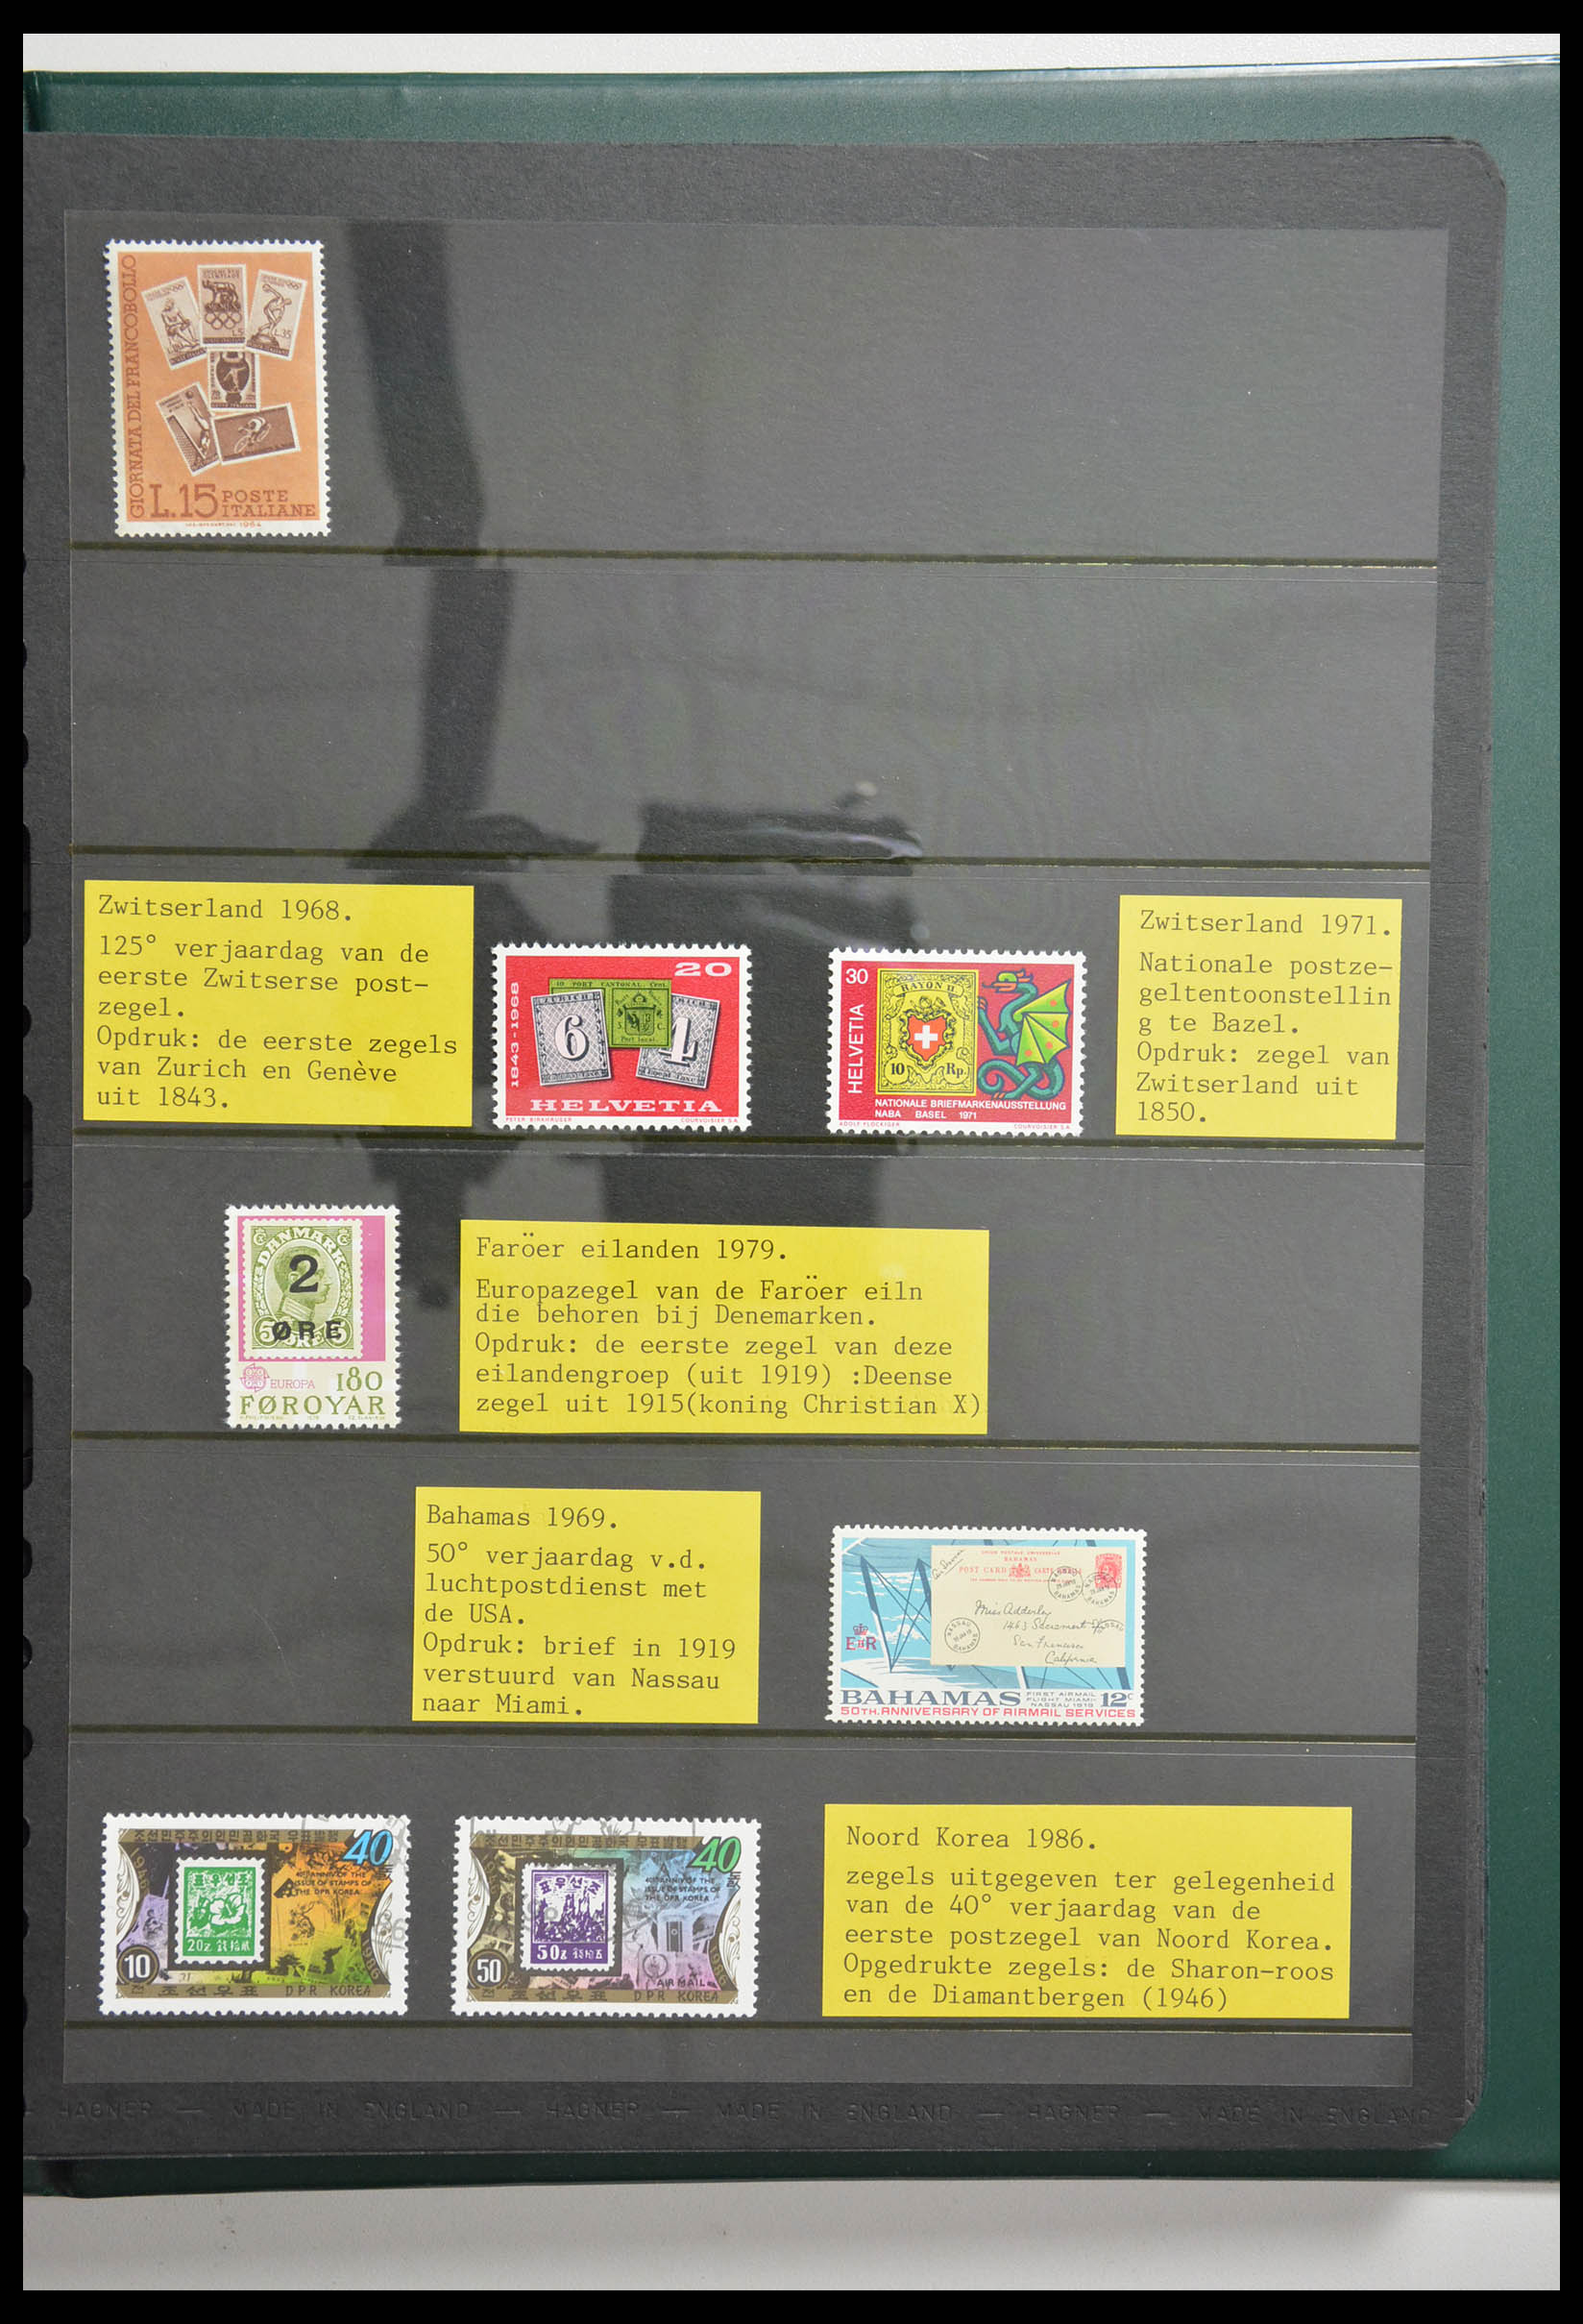 28337 059 - 28337 Postzegel op postzegel 1840-2001.